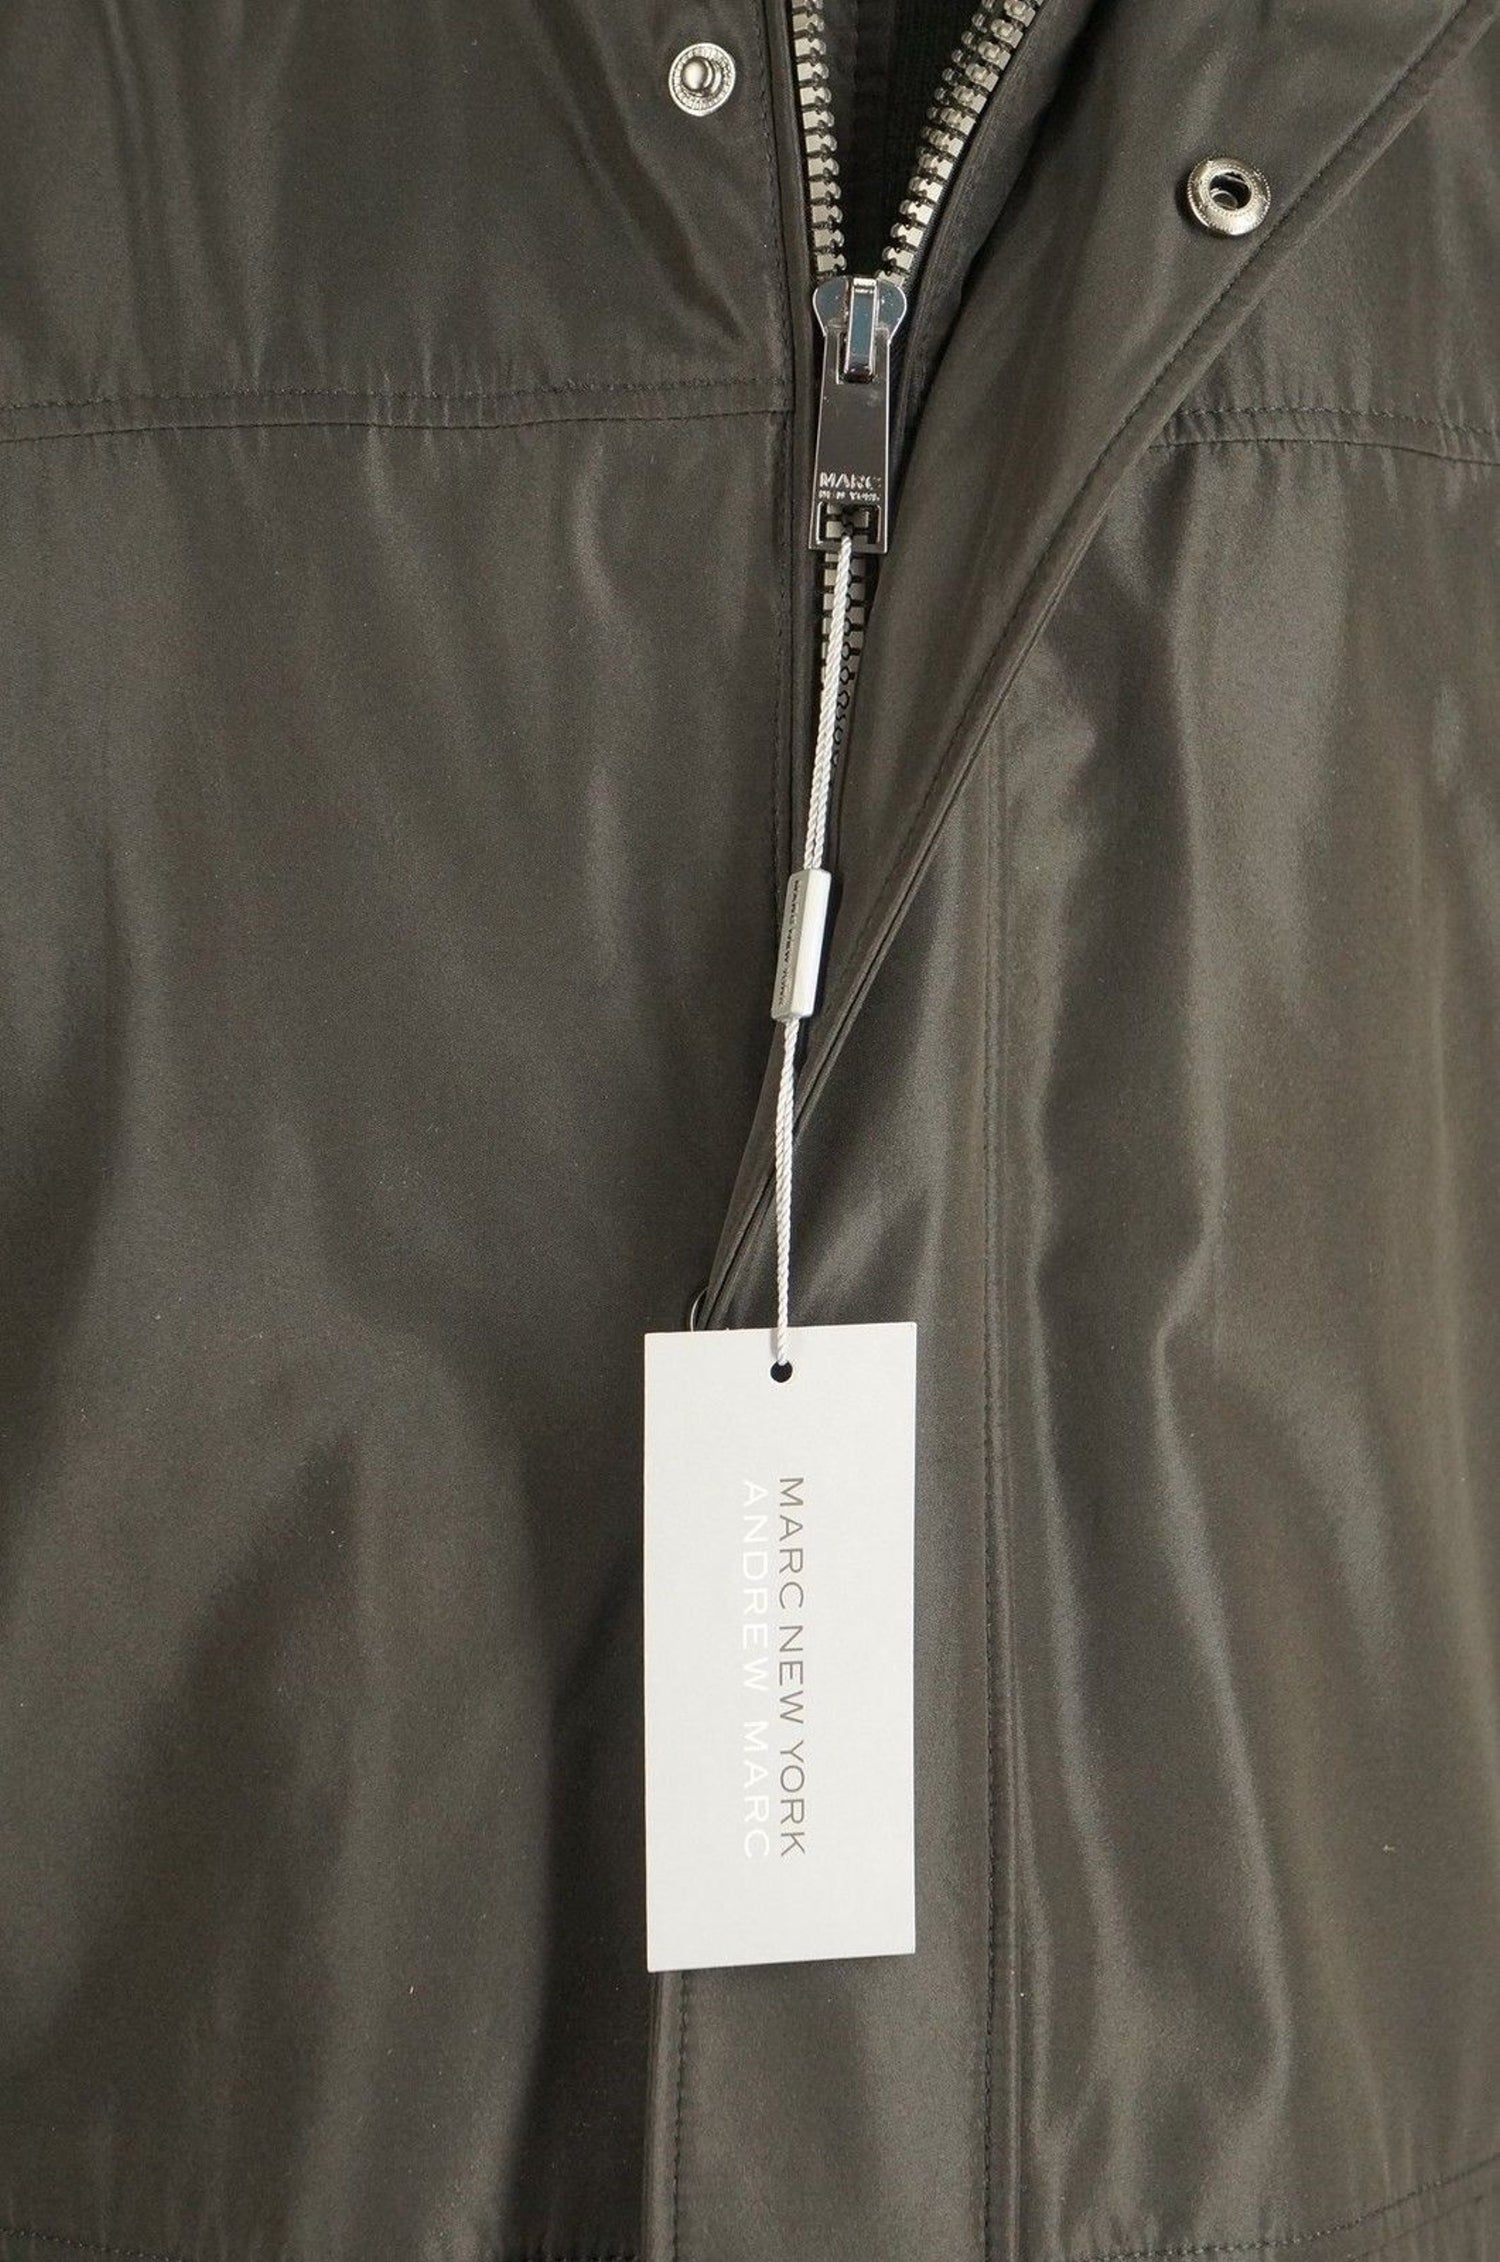 Marc New York by Andrew Black Nylon Branson Mens Rain Jacket Size Large $375 New